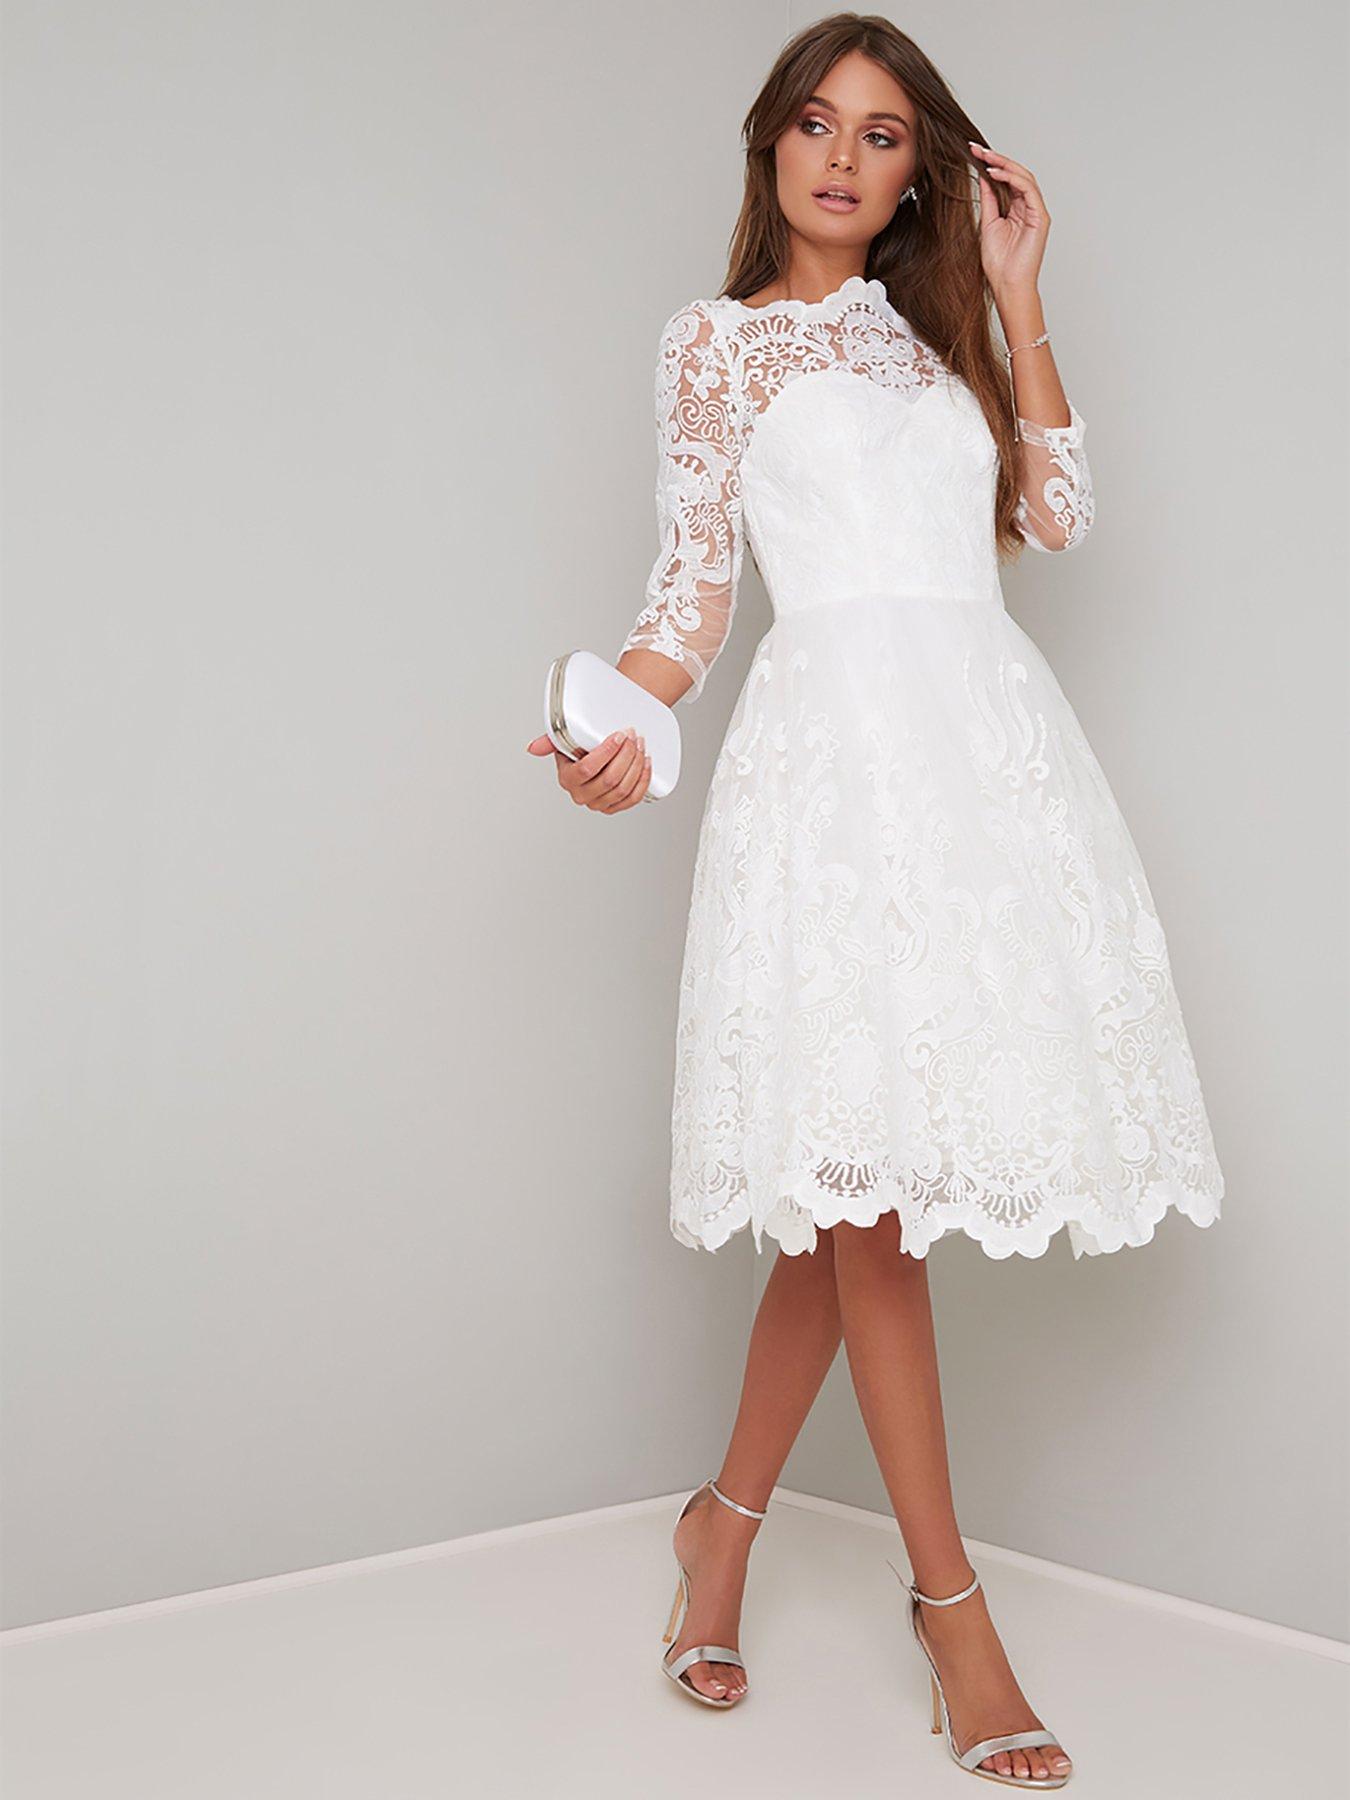 white elegant evening dresses uk